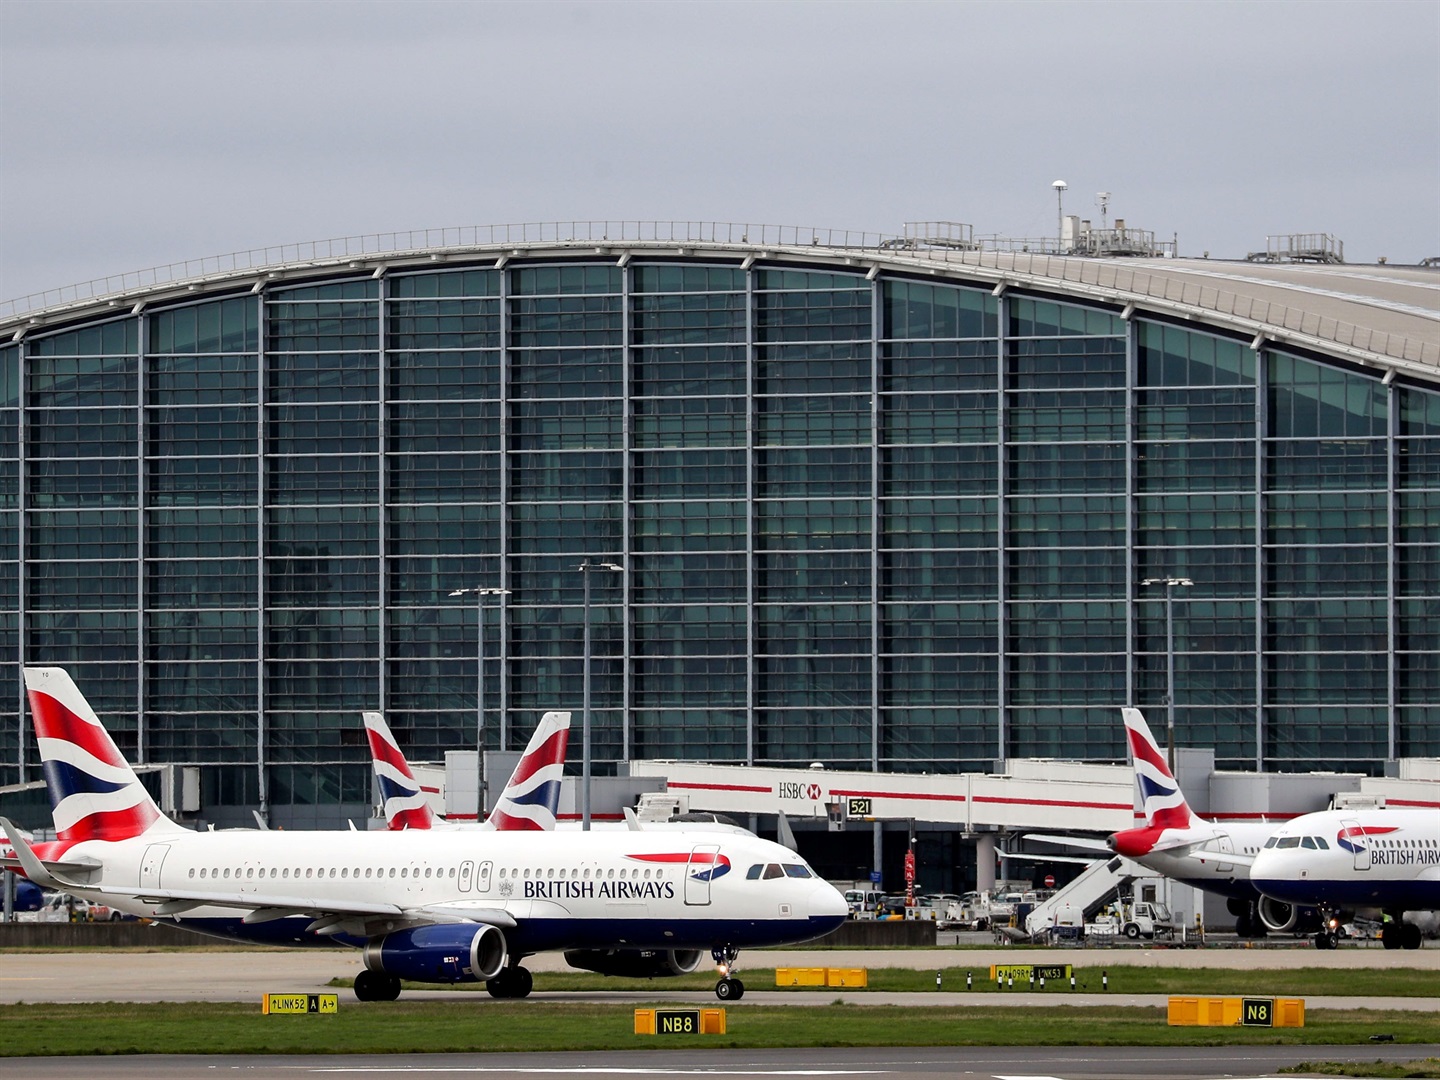 BA said the "vast majority" of its flights were operating on Friday.